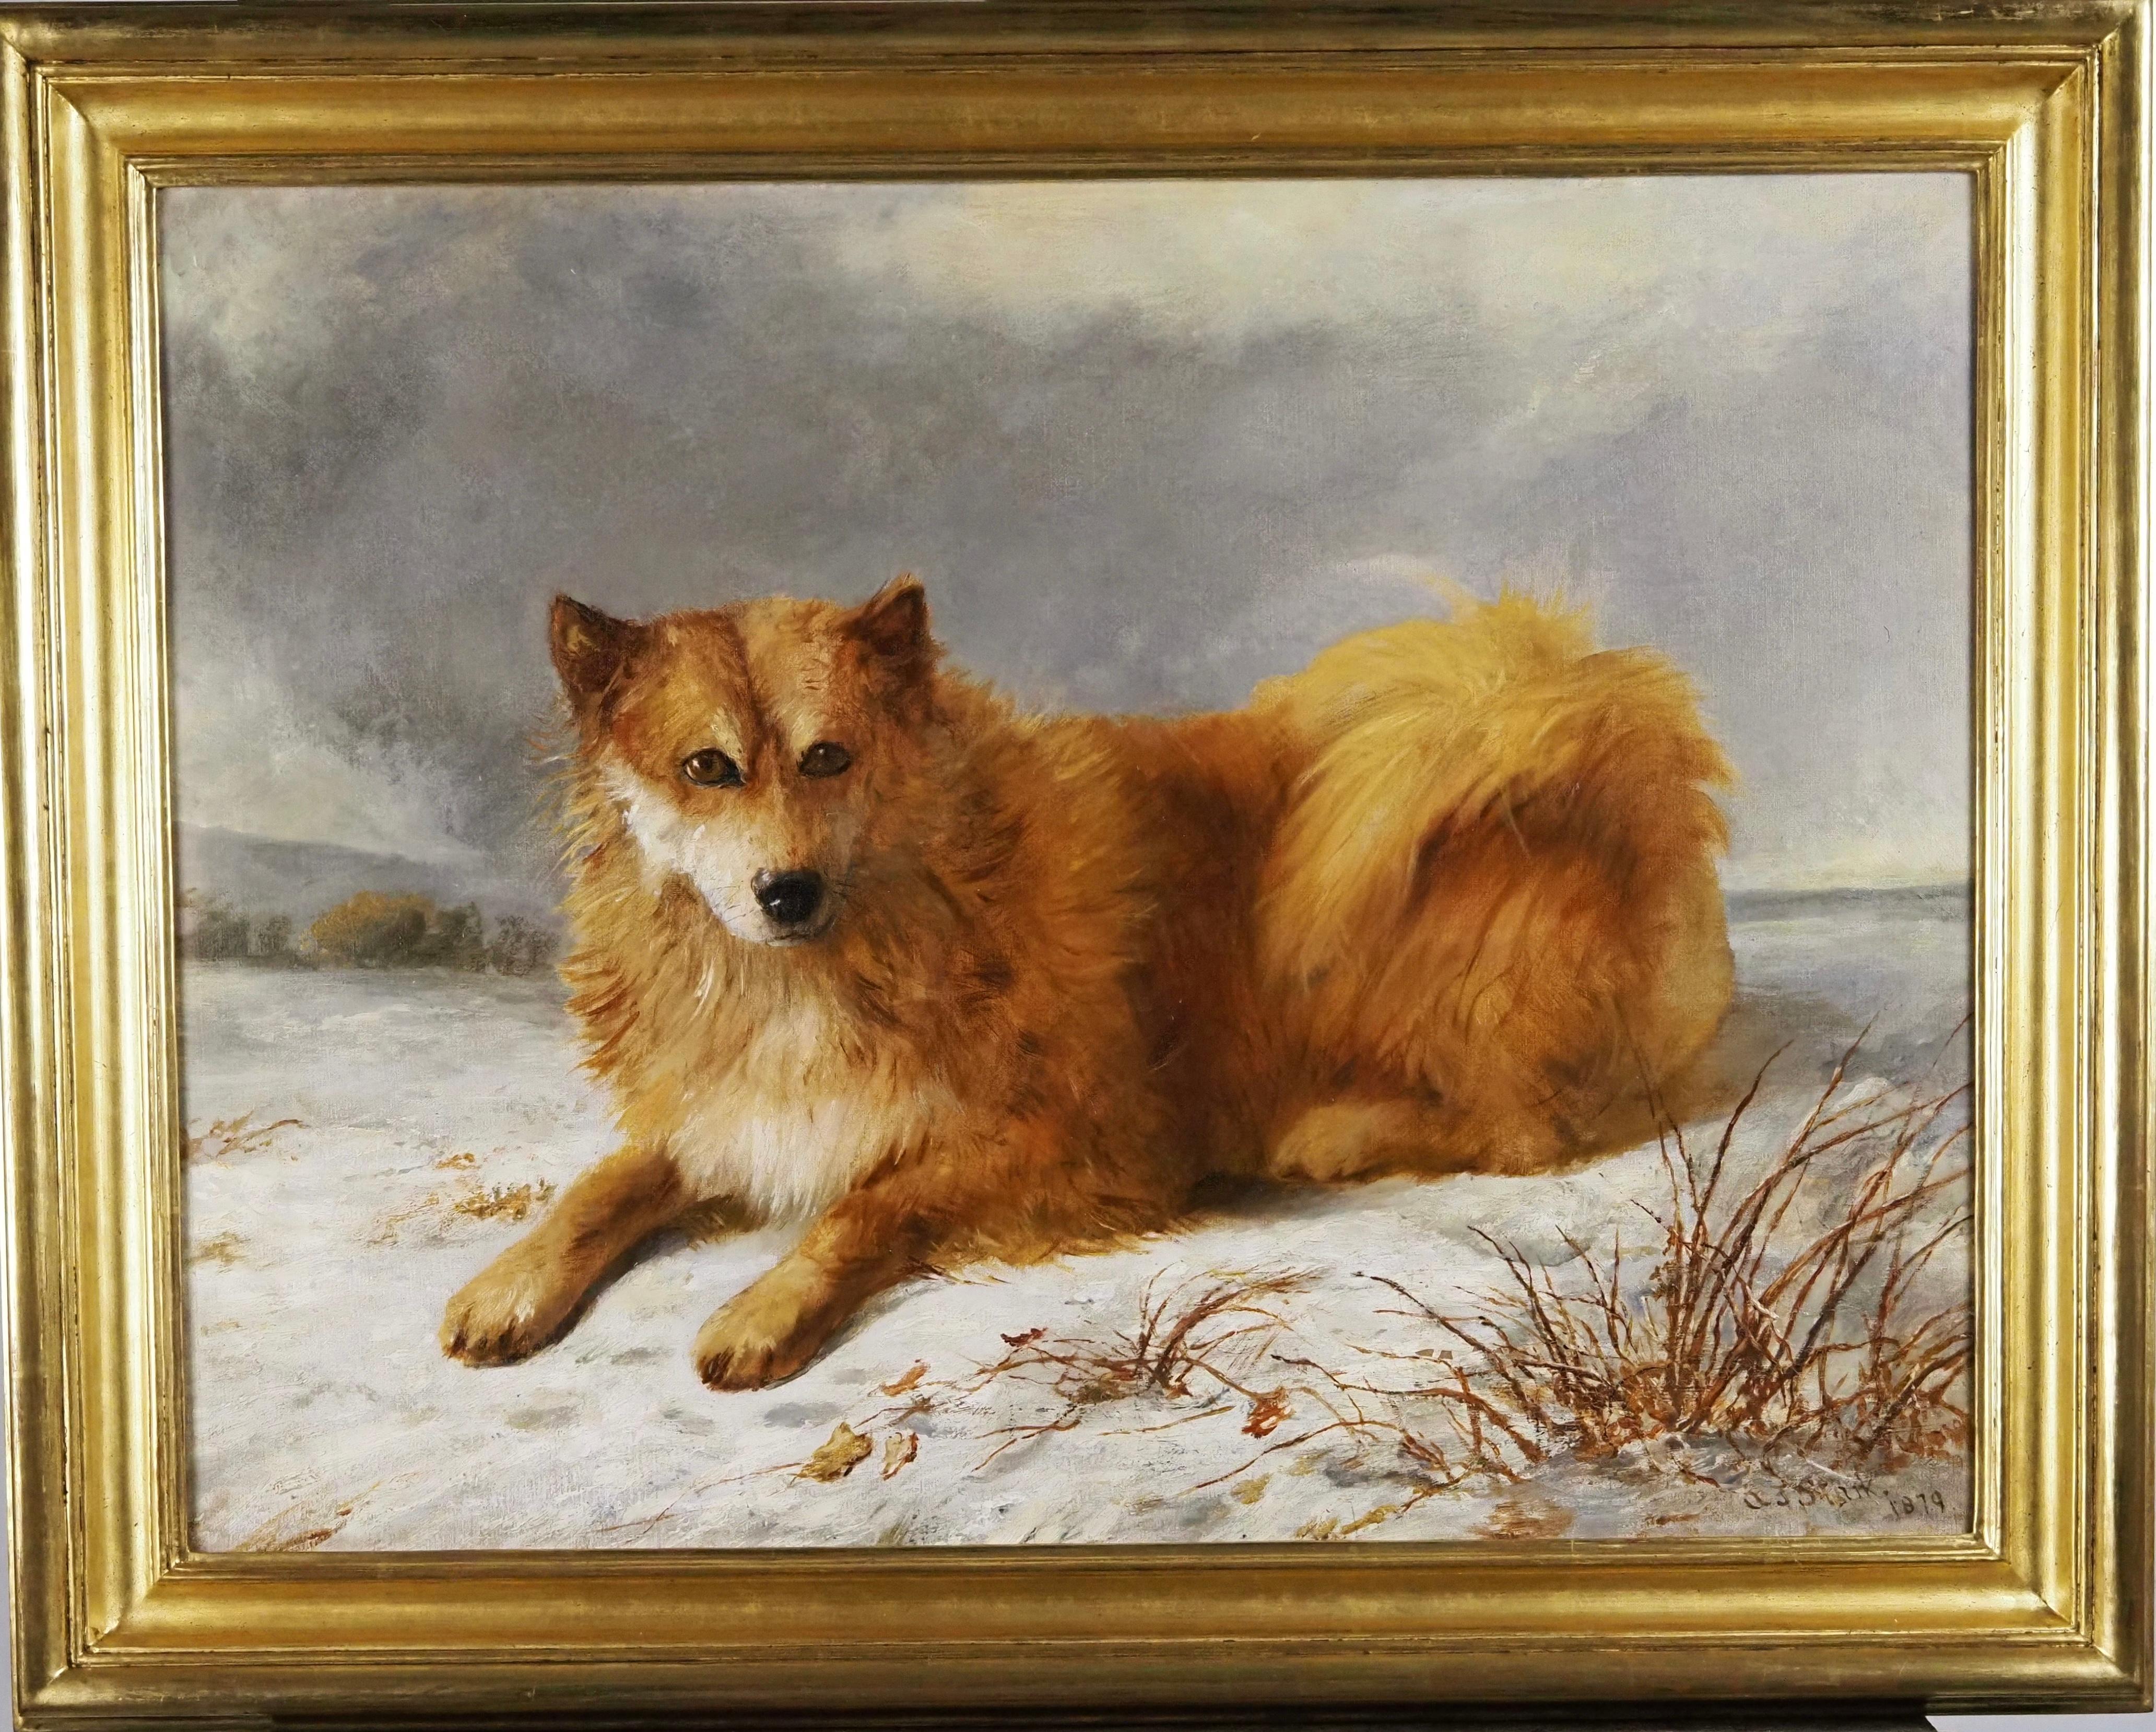 A Husky in a snowy landscape - Painting by Arthur James Stark